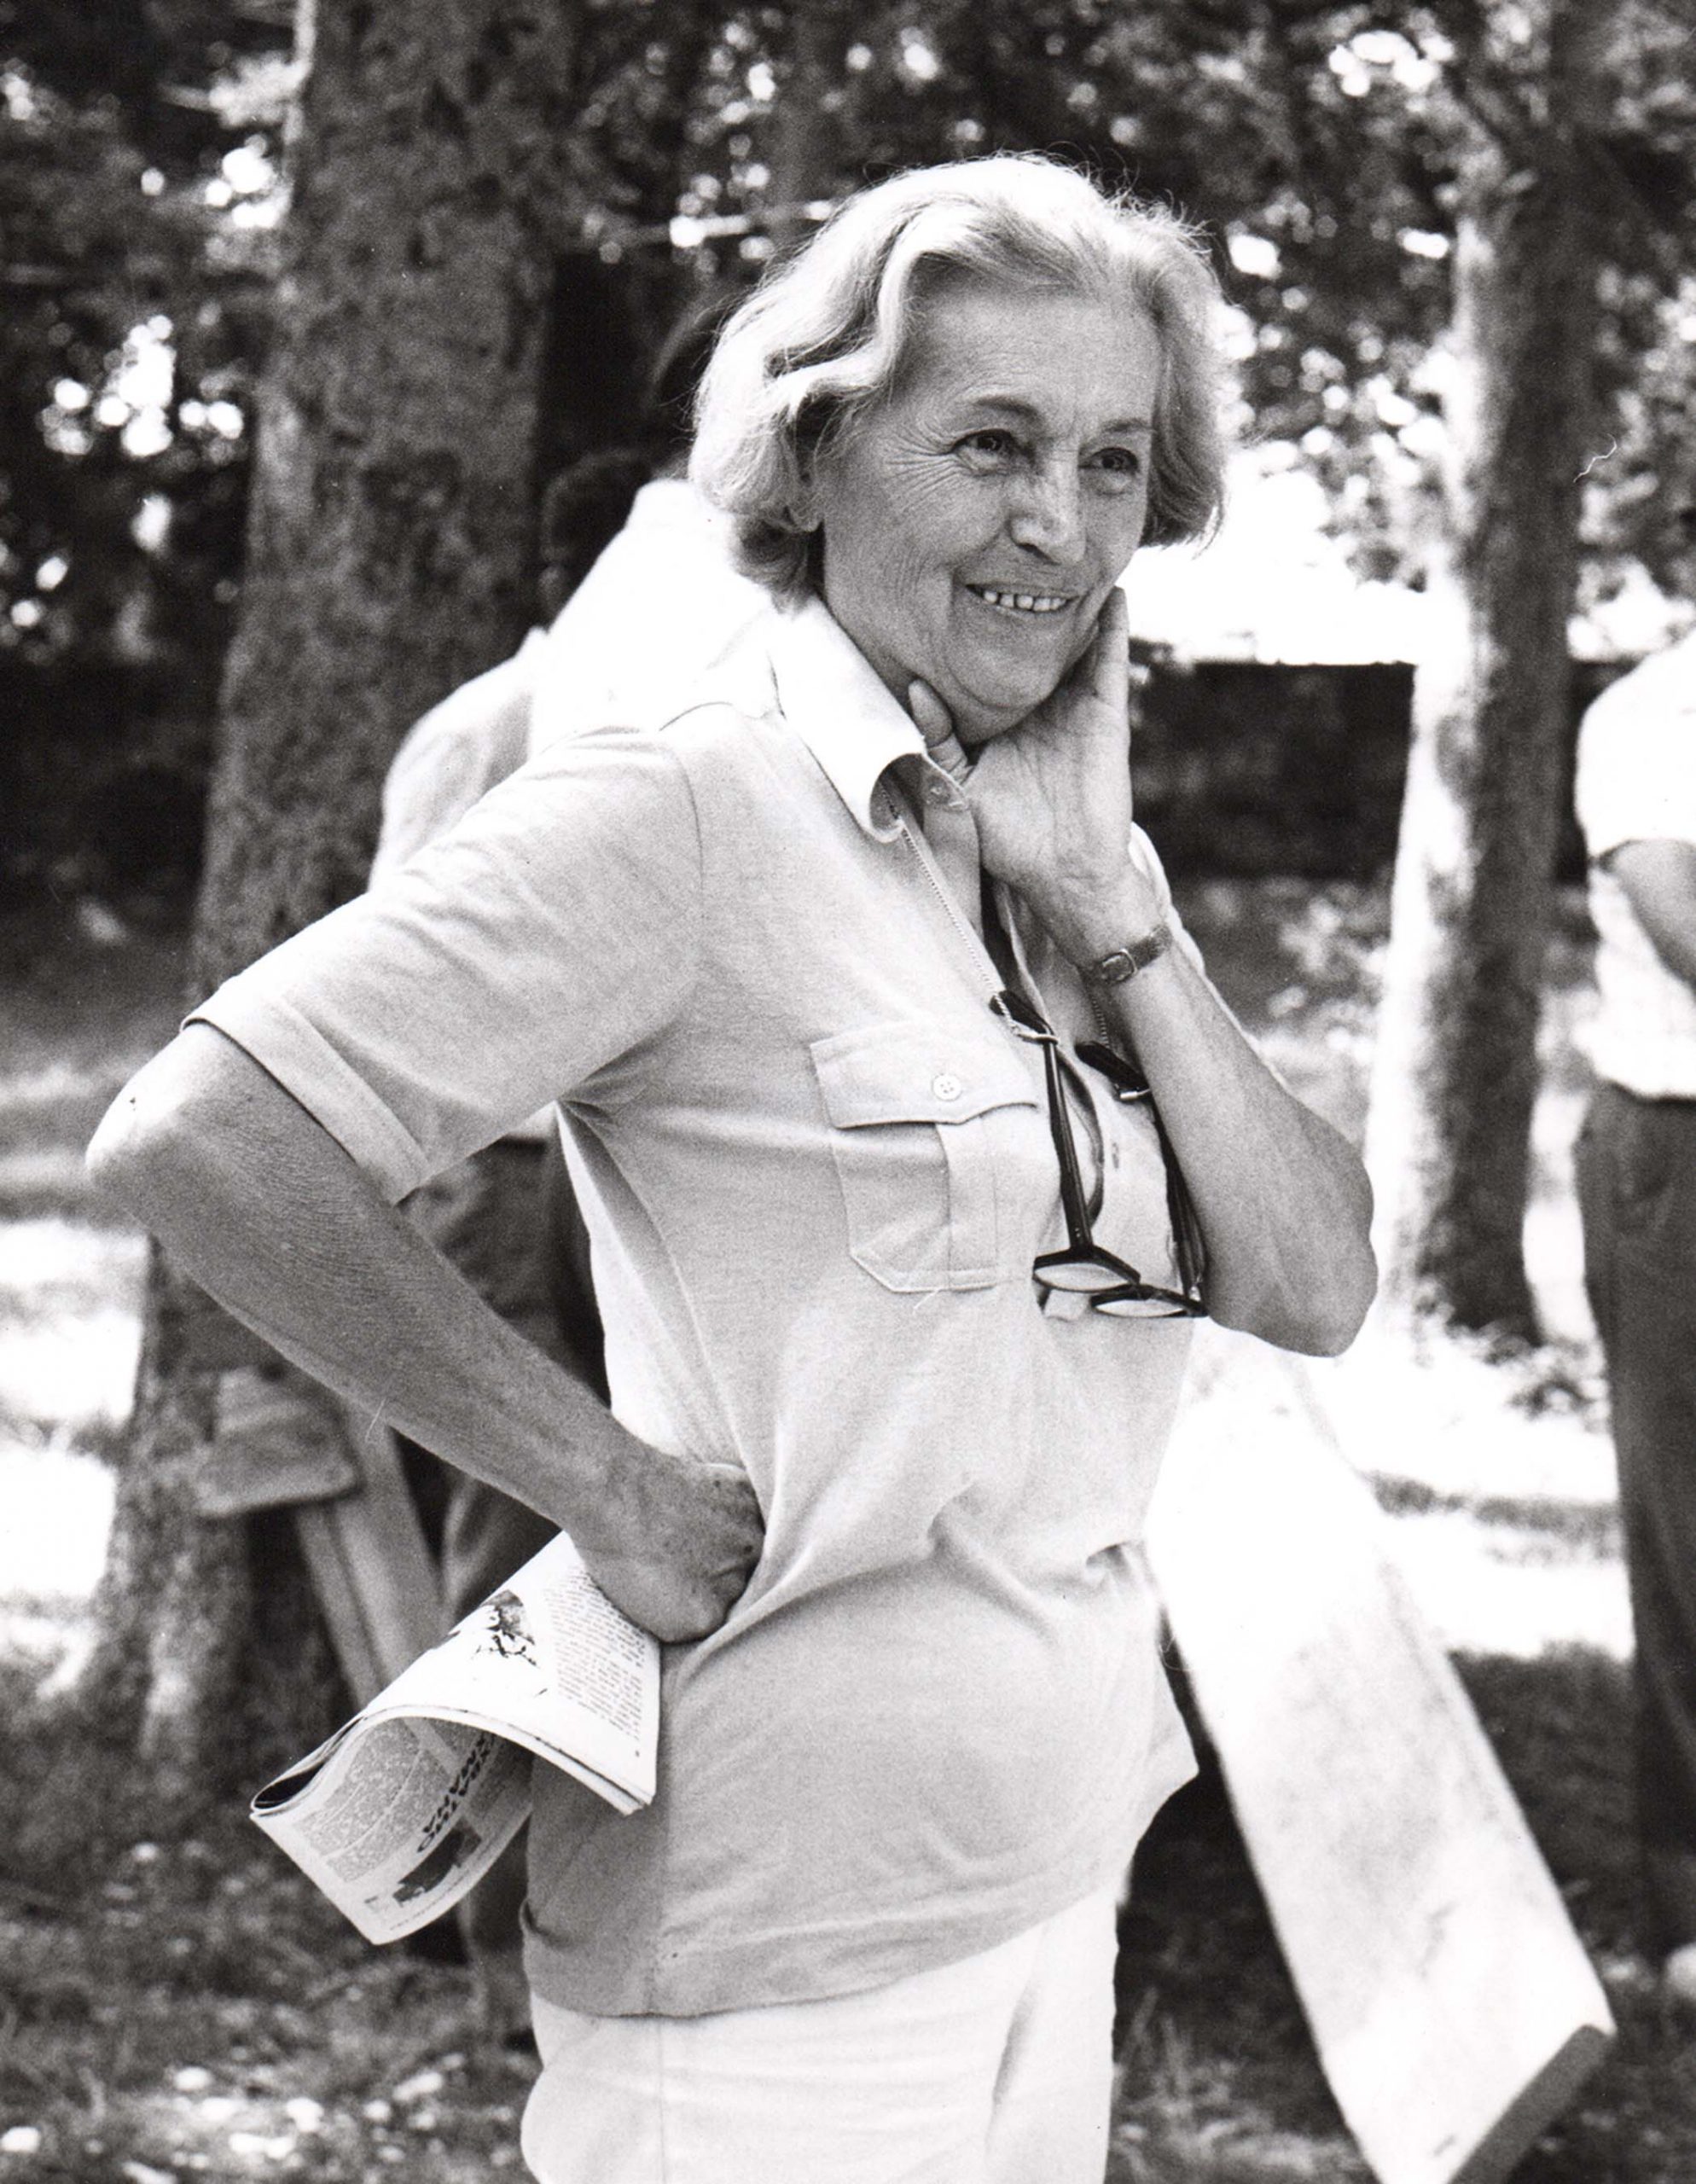 Ana Bešlić, Frutto, 1975